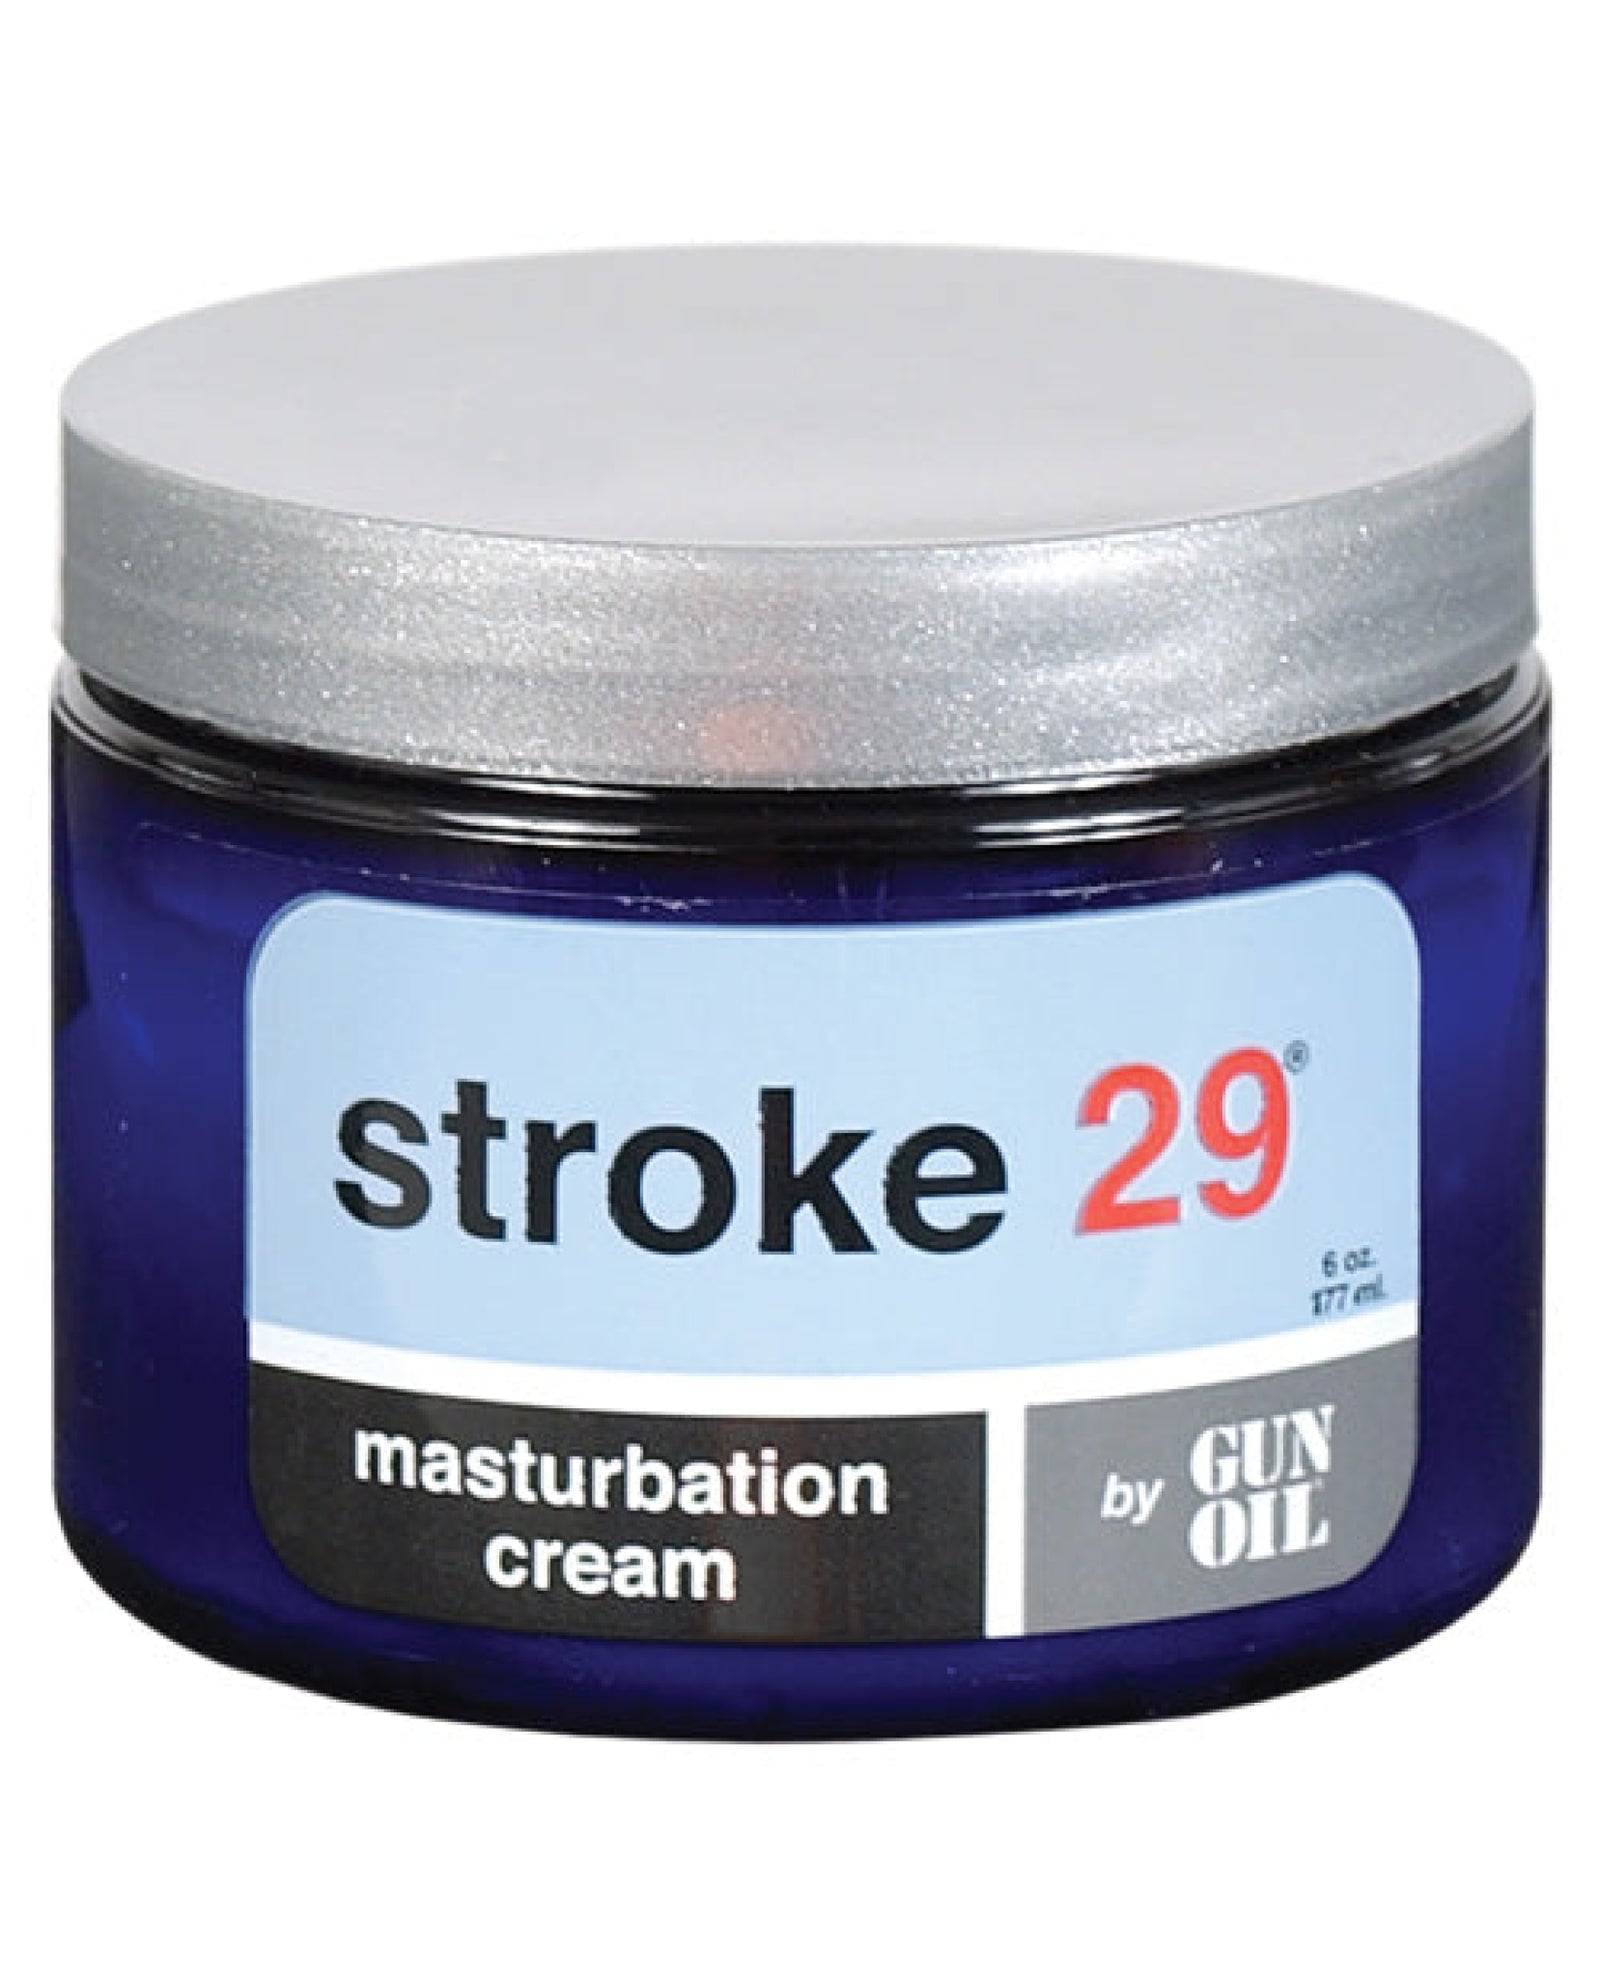 Stroke 29 Masturbation Cream - 6.7 Oz Jar Gun Oil